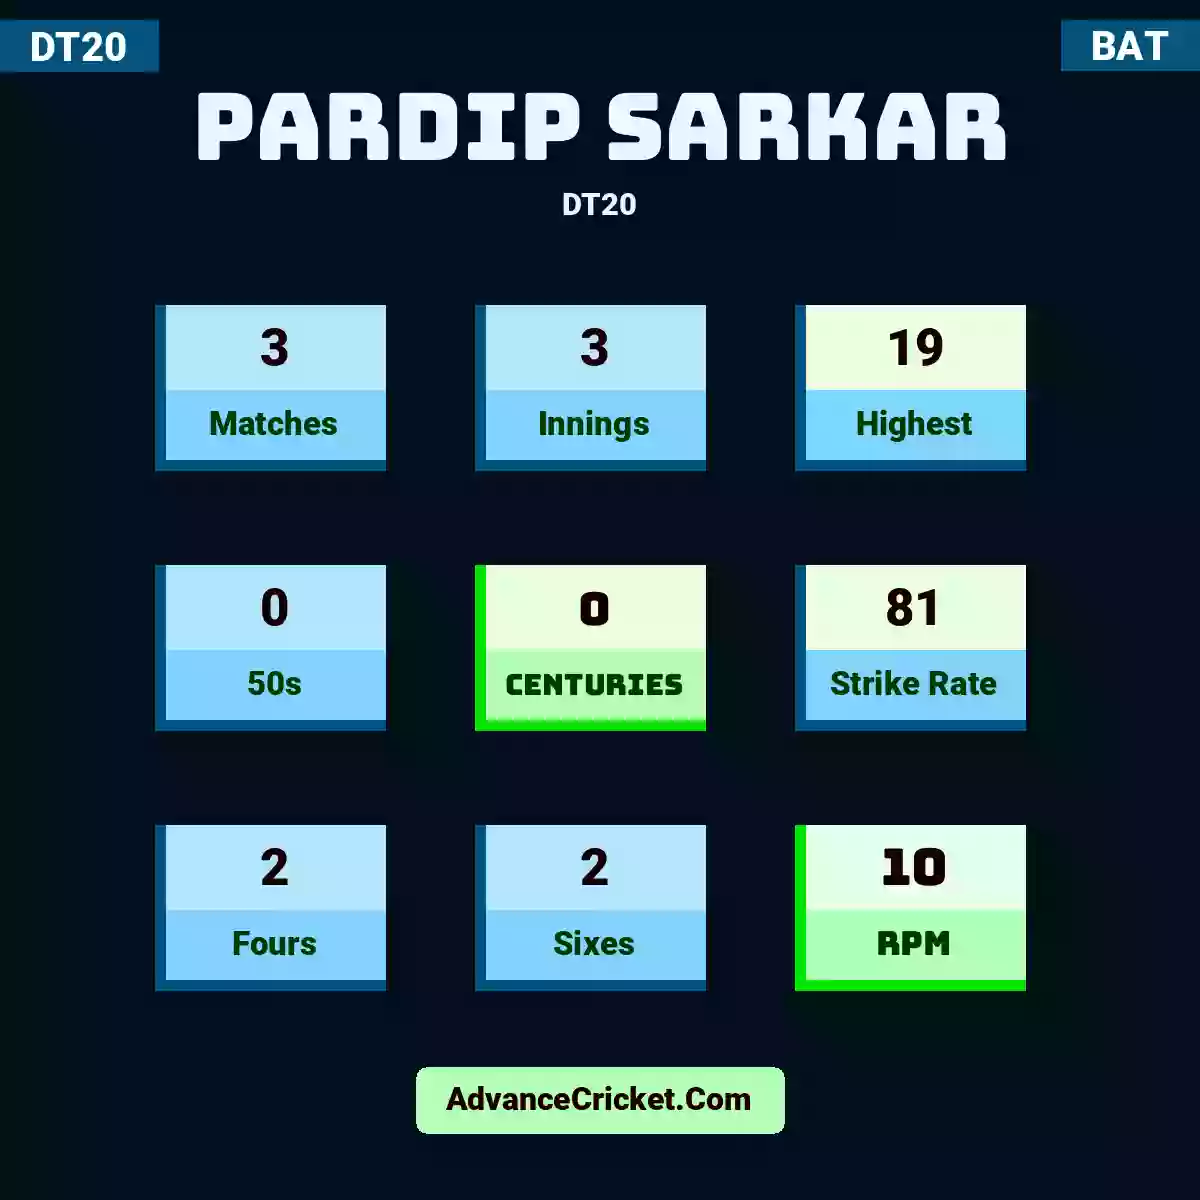 Pardip Sarkar DT20 , Pardip Sarkar played 3 matches, scored 19 runs as highest, 0 half-centuries, and 0 centuries, with a strike rate of 81. P.Sarkar hit 2 fours and 2 sixes, with an RPM of 10.